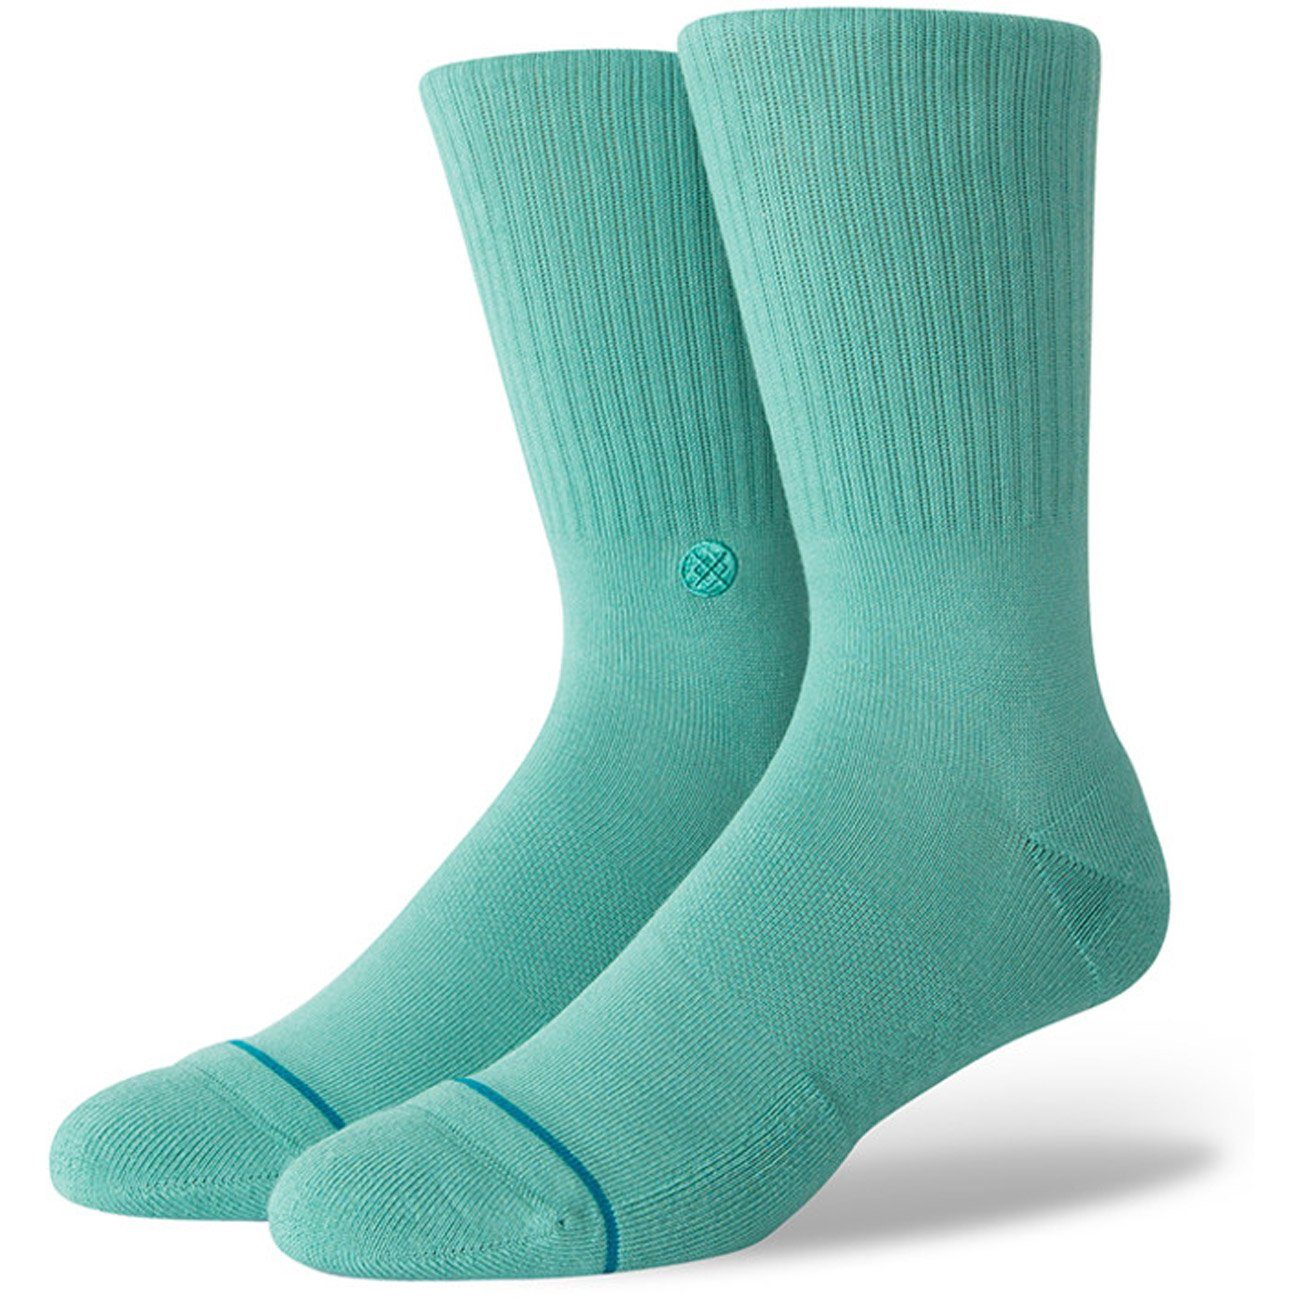 Stance Socken ICON turquoise